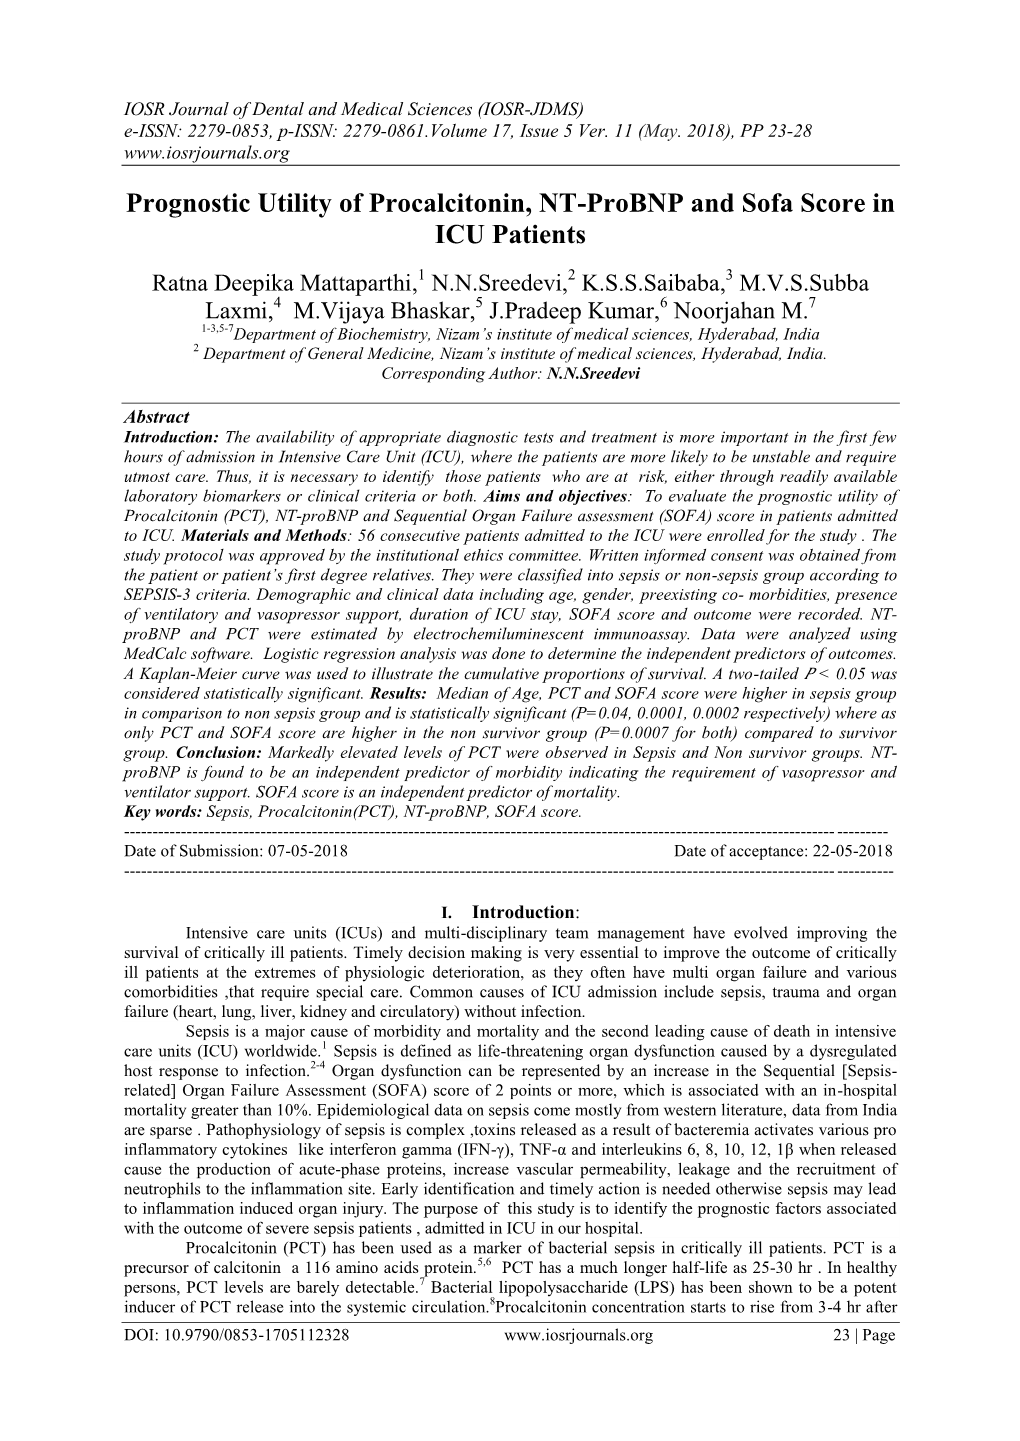 Prognostic Utility of Procalcitonin, NT-Probnp and Sofa Score in ICU Patients